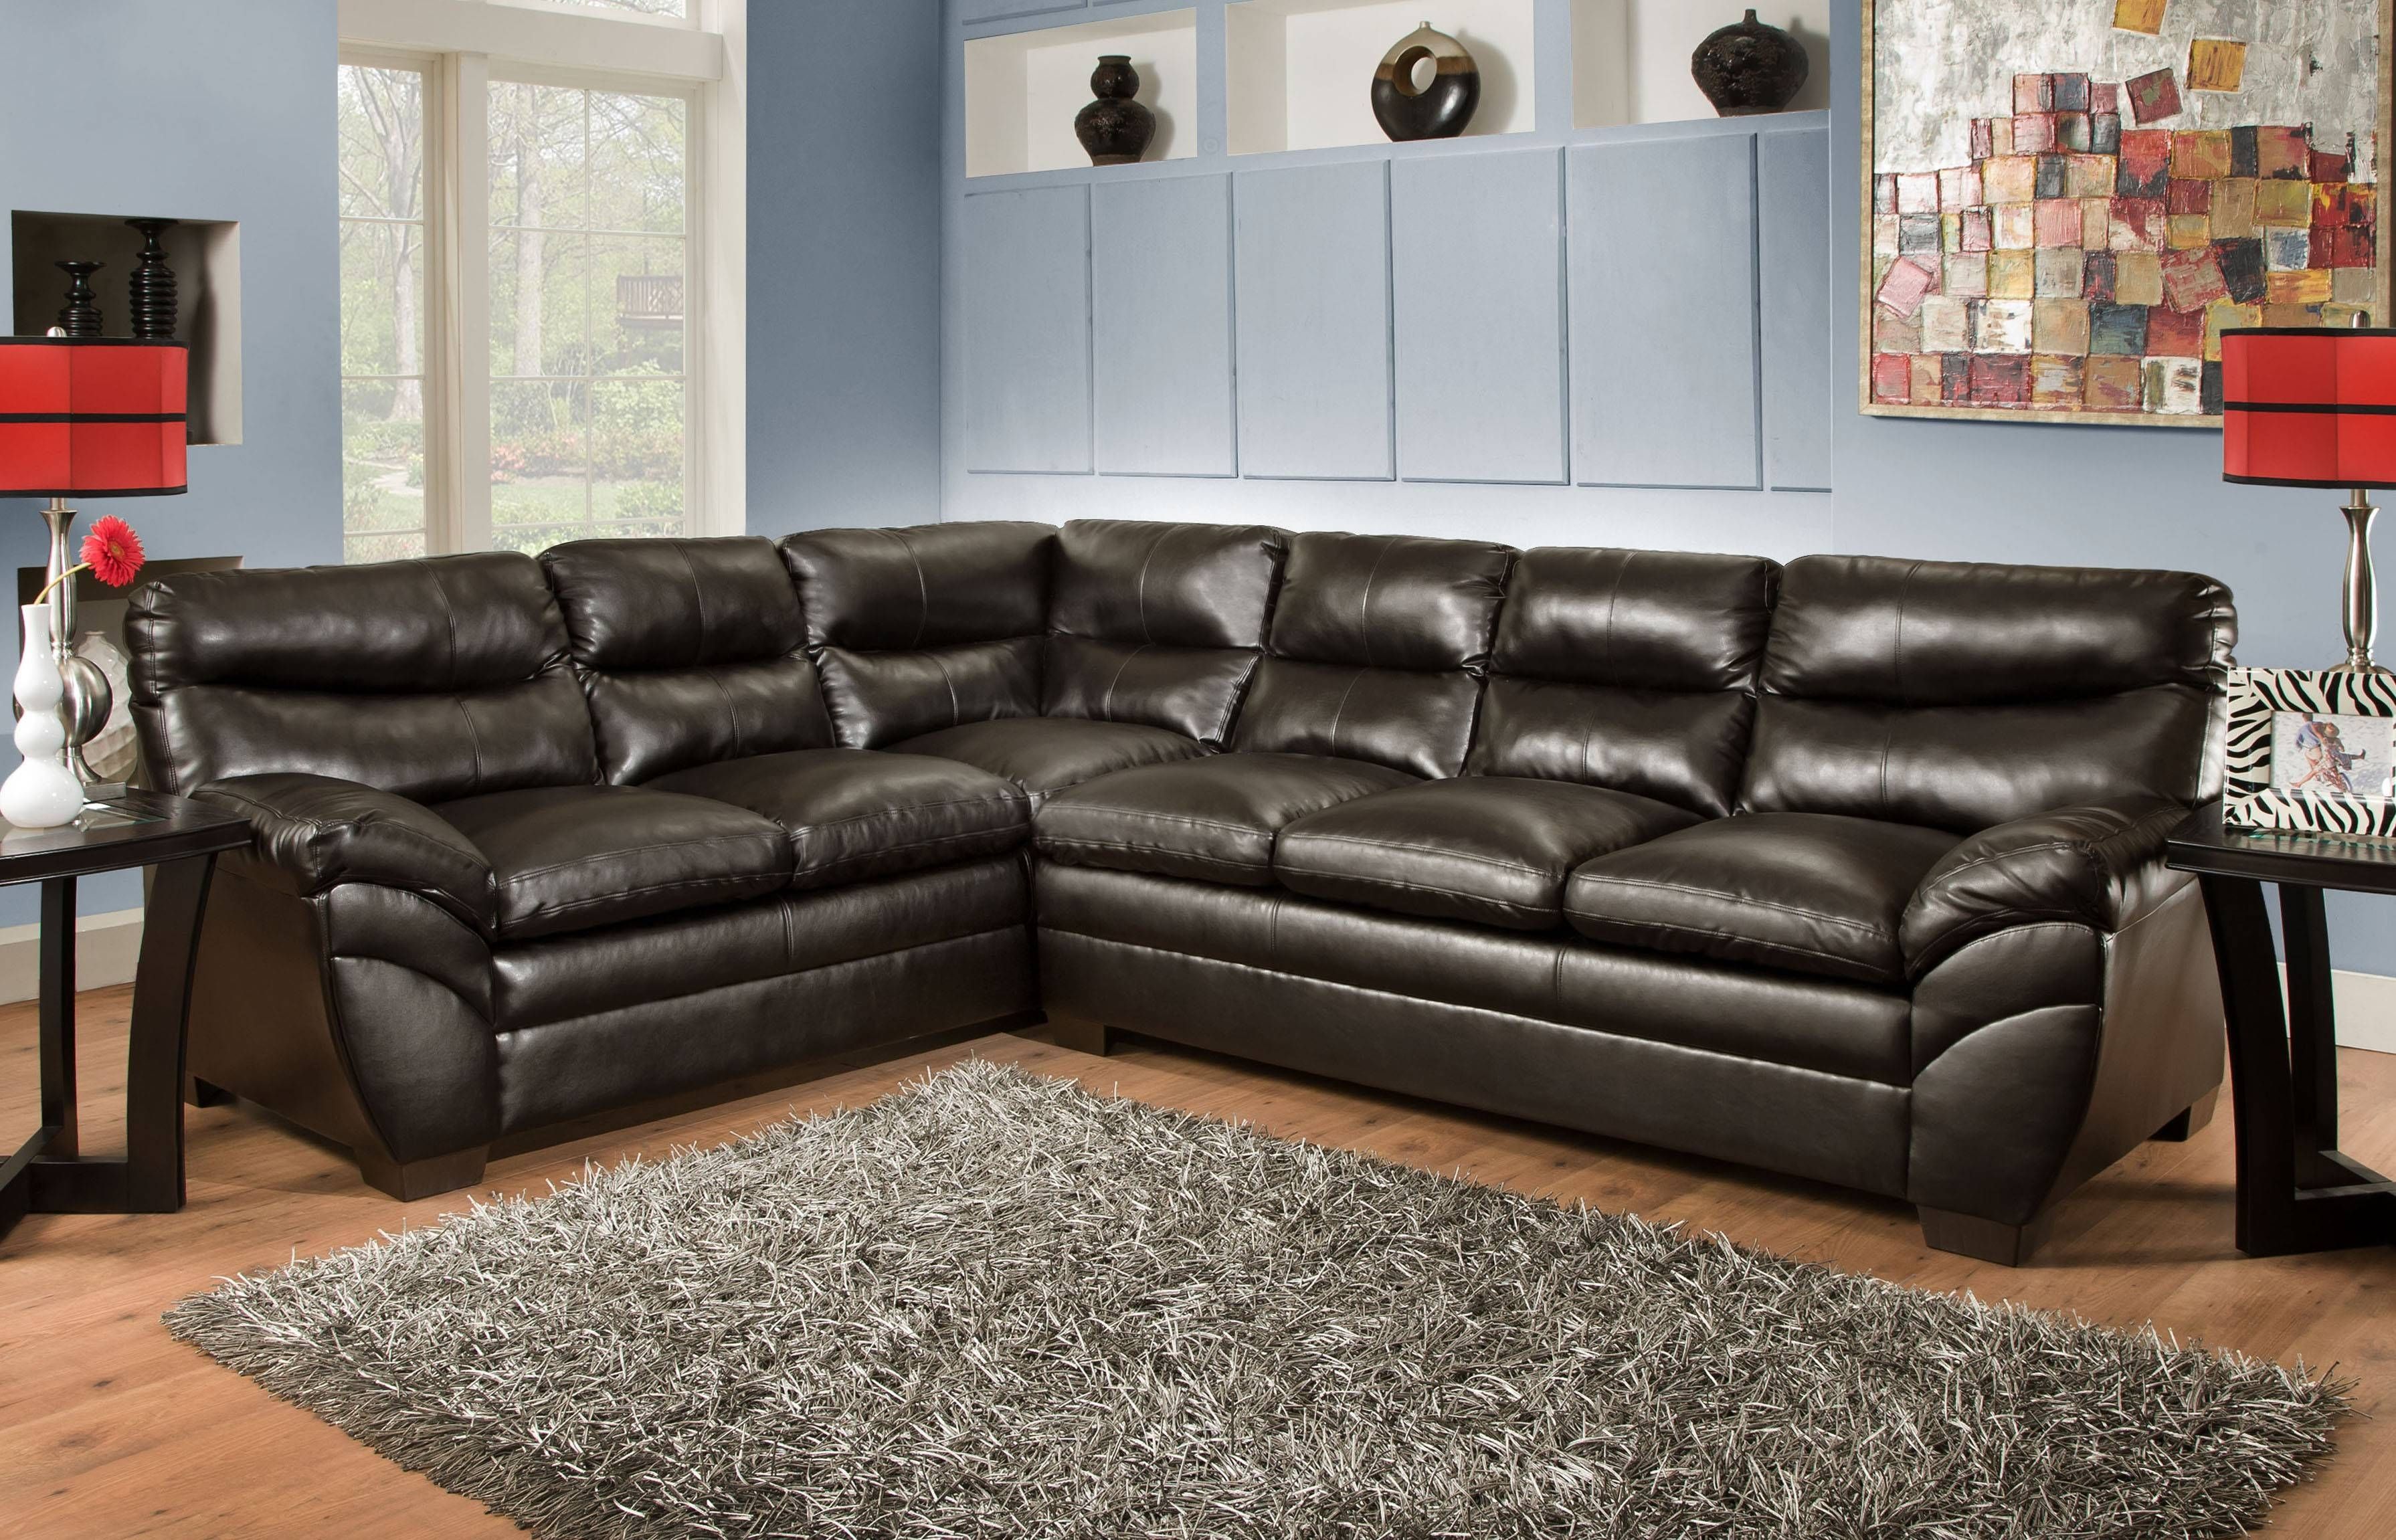 Sofa : Leather Sofas Orange County Home Design Wonderfull In Sofas Orange County (View 6 of 30)